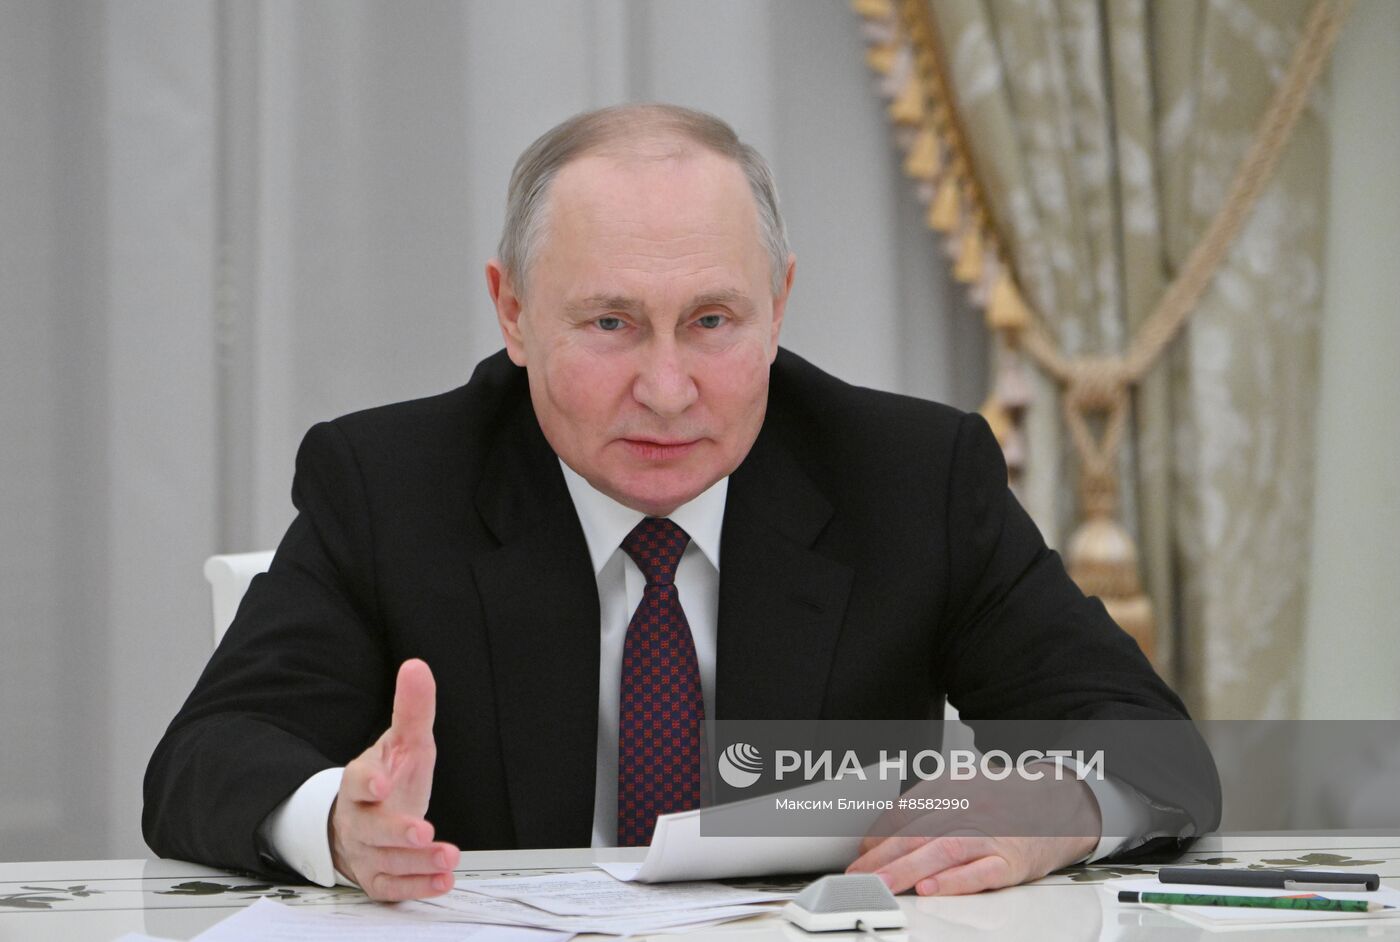 Президент РФ В. Путин встретился с главами думских фракций 